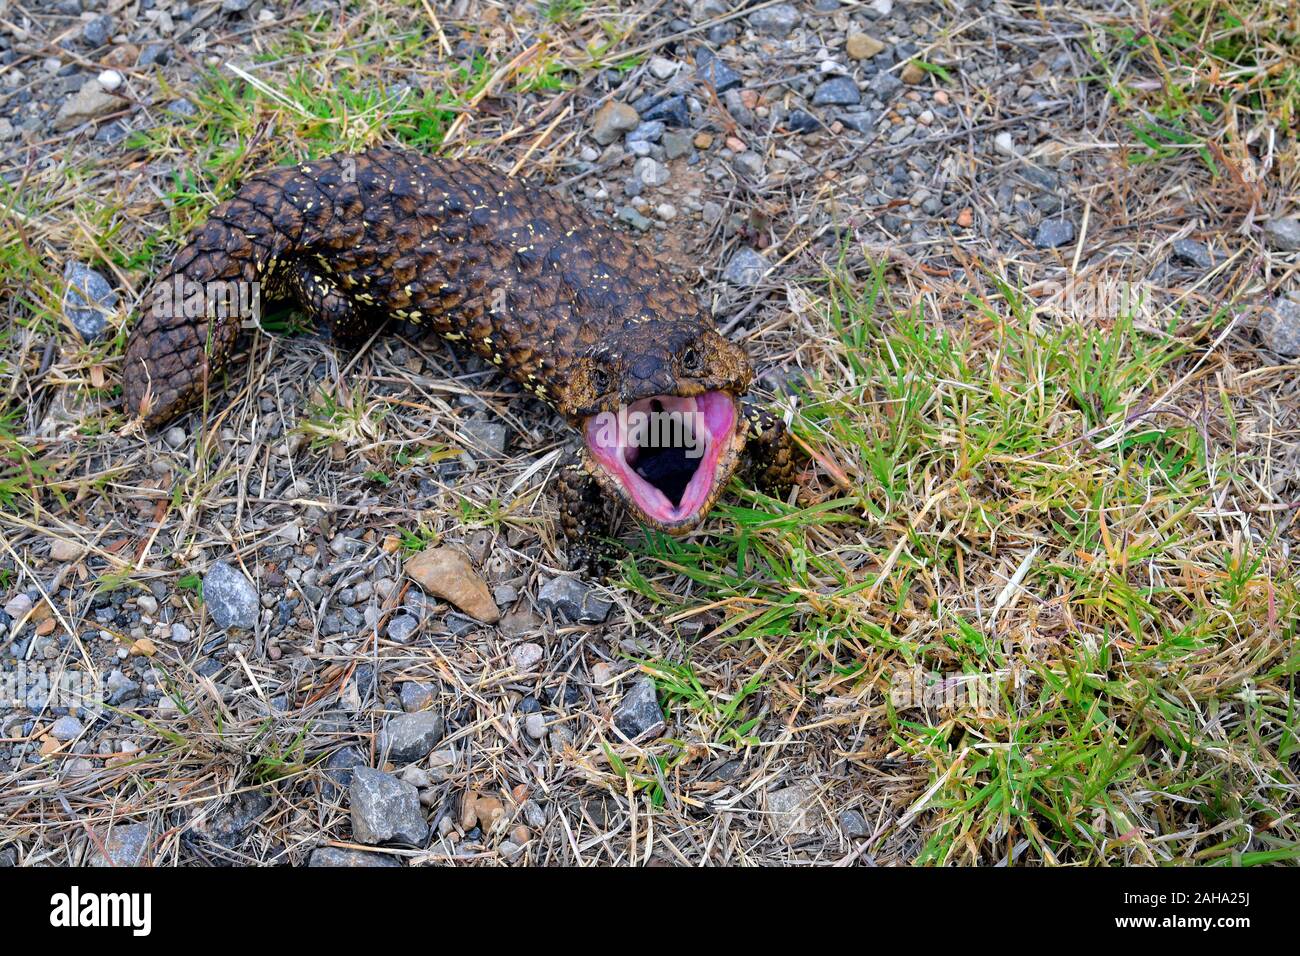 Australia, shingleback lizard in threatening gesture Stock Photo